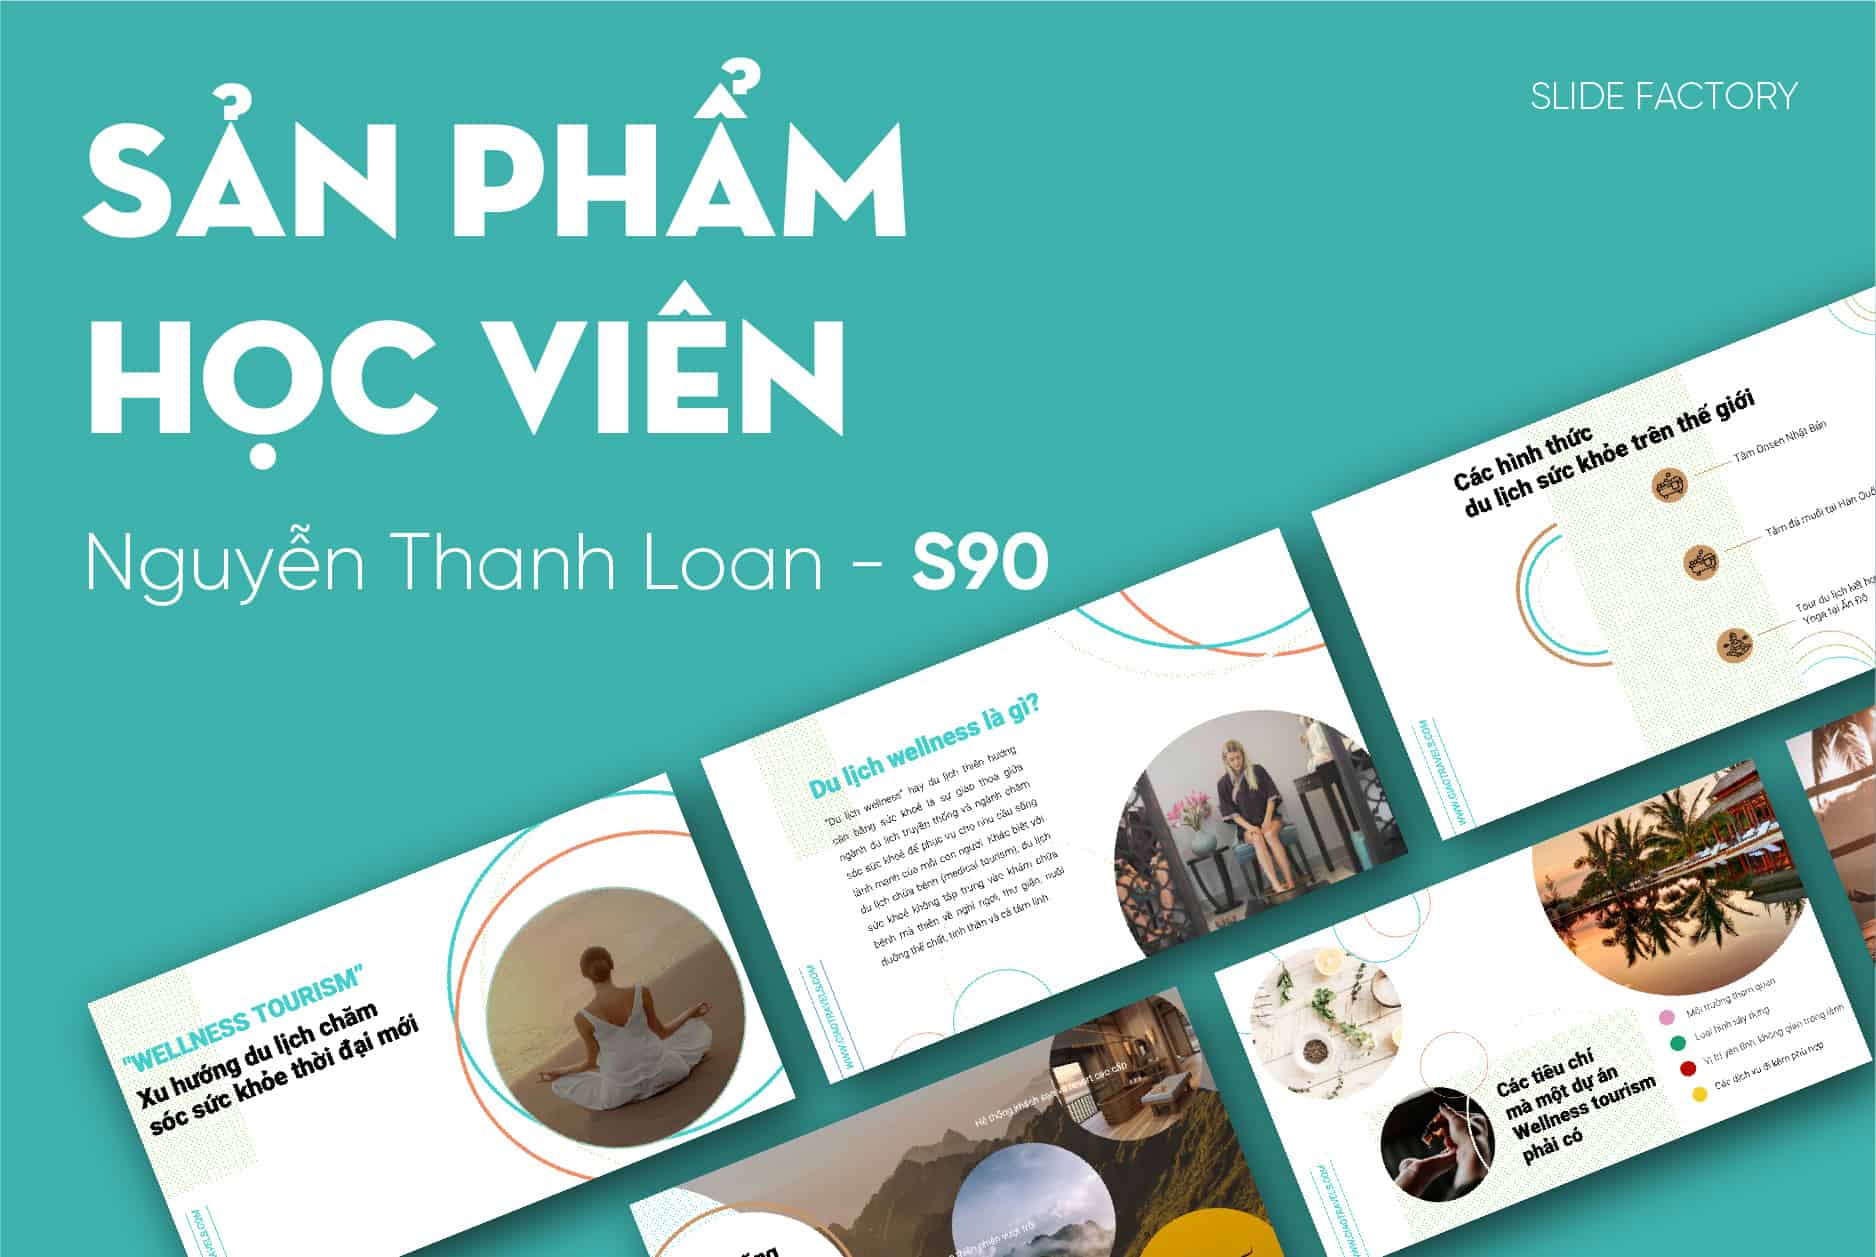 Nguyễn Thanh Loan - S90